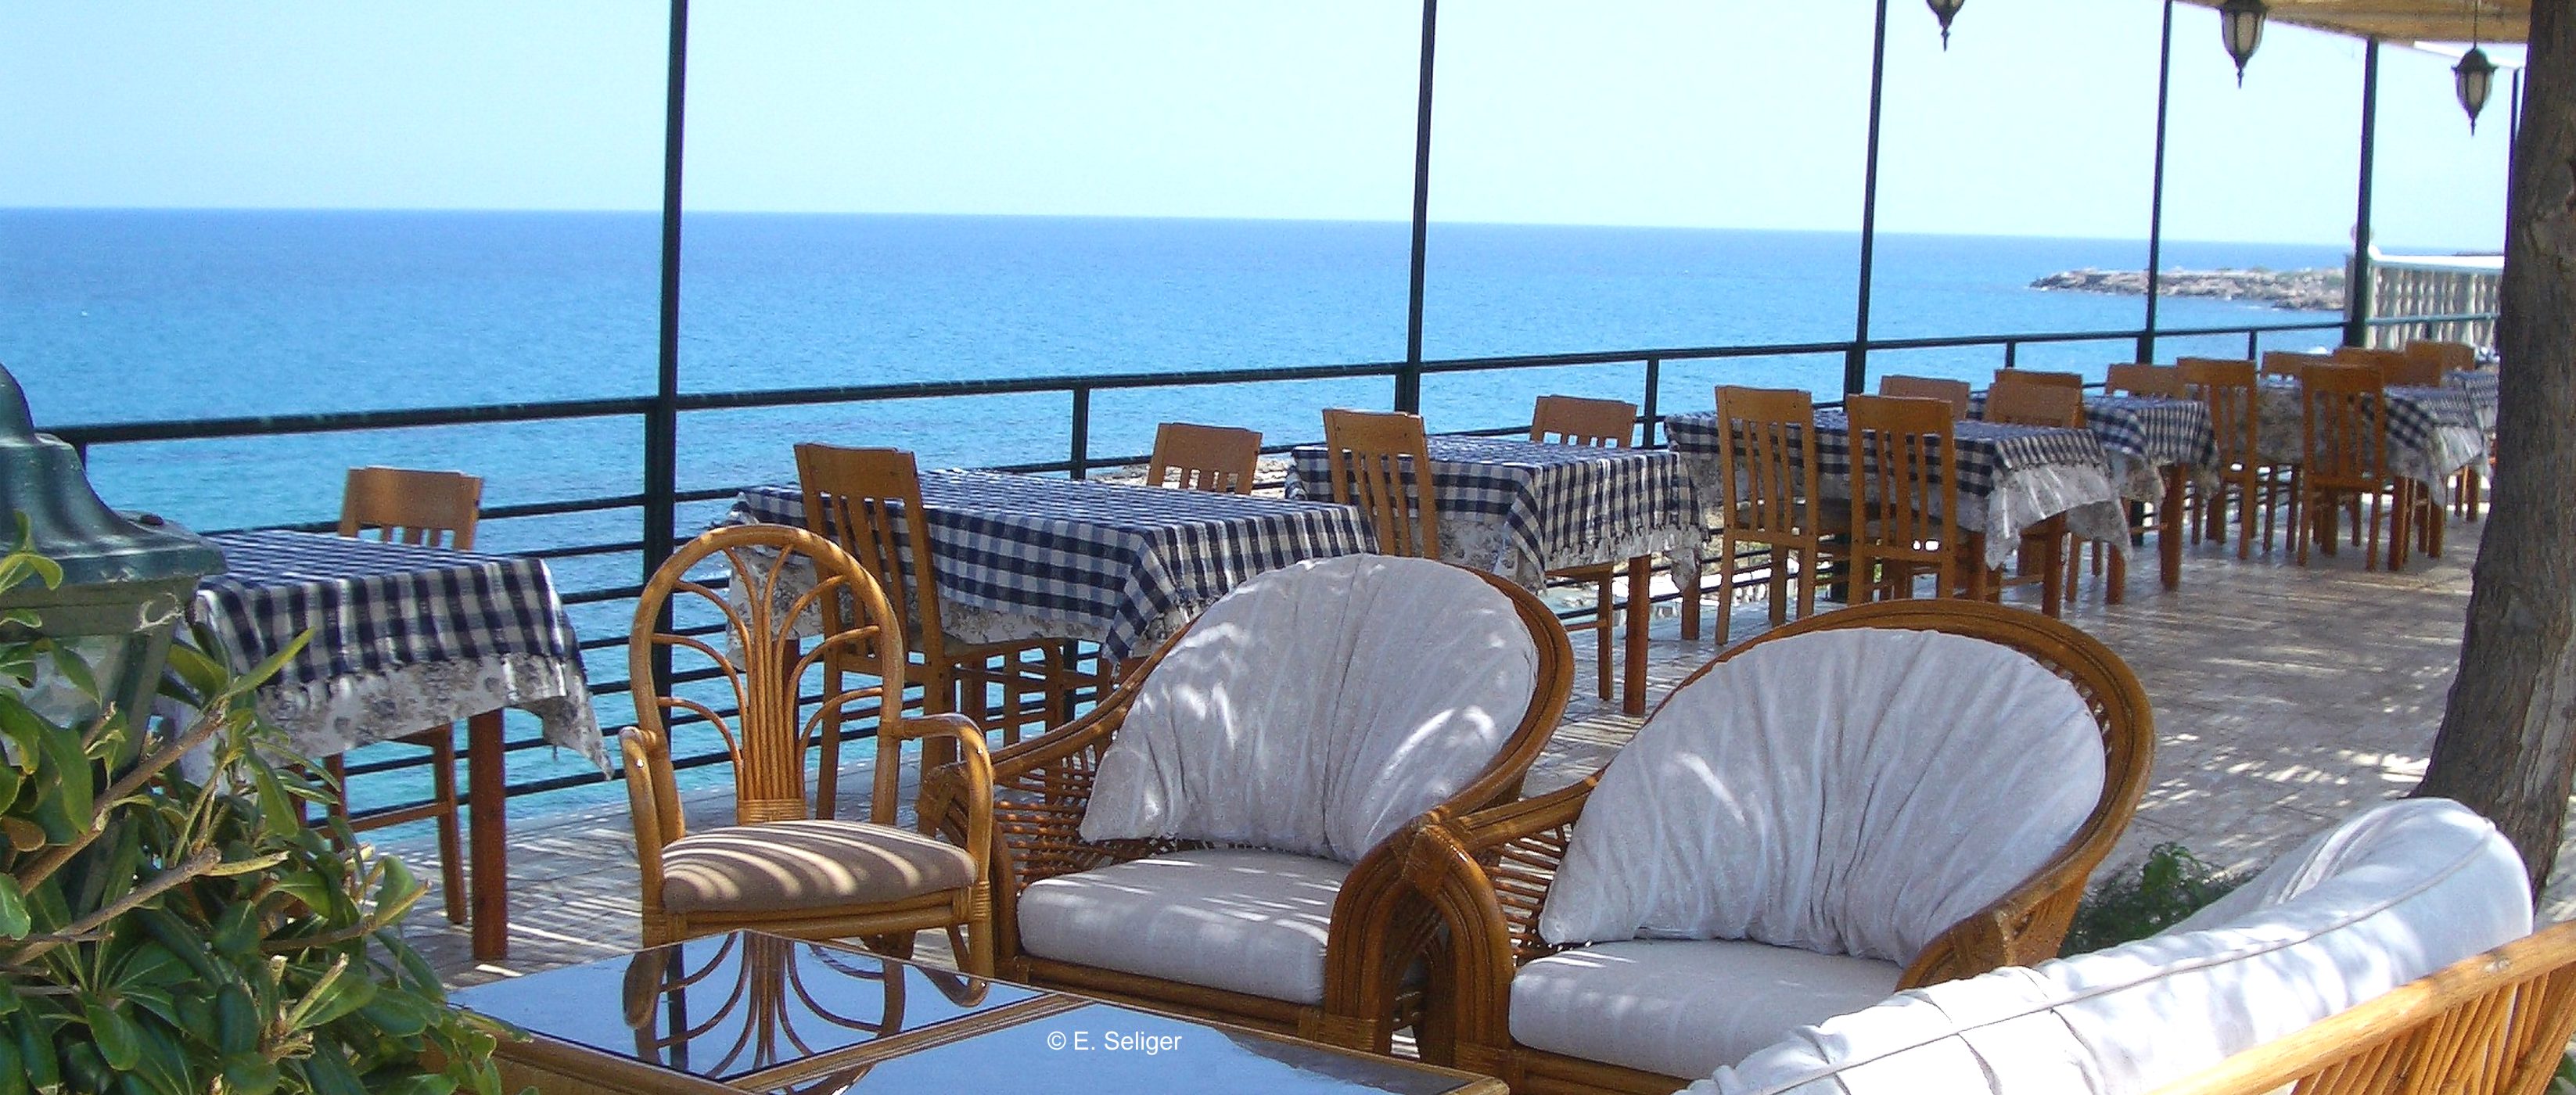 Nordzypern High Life Hotel - Lupe Reisen